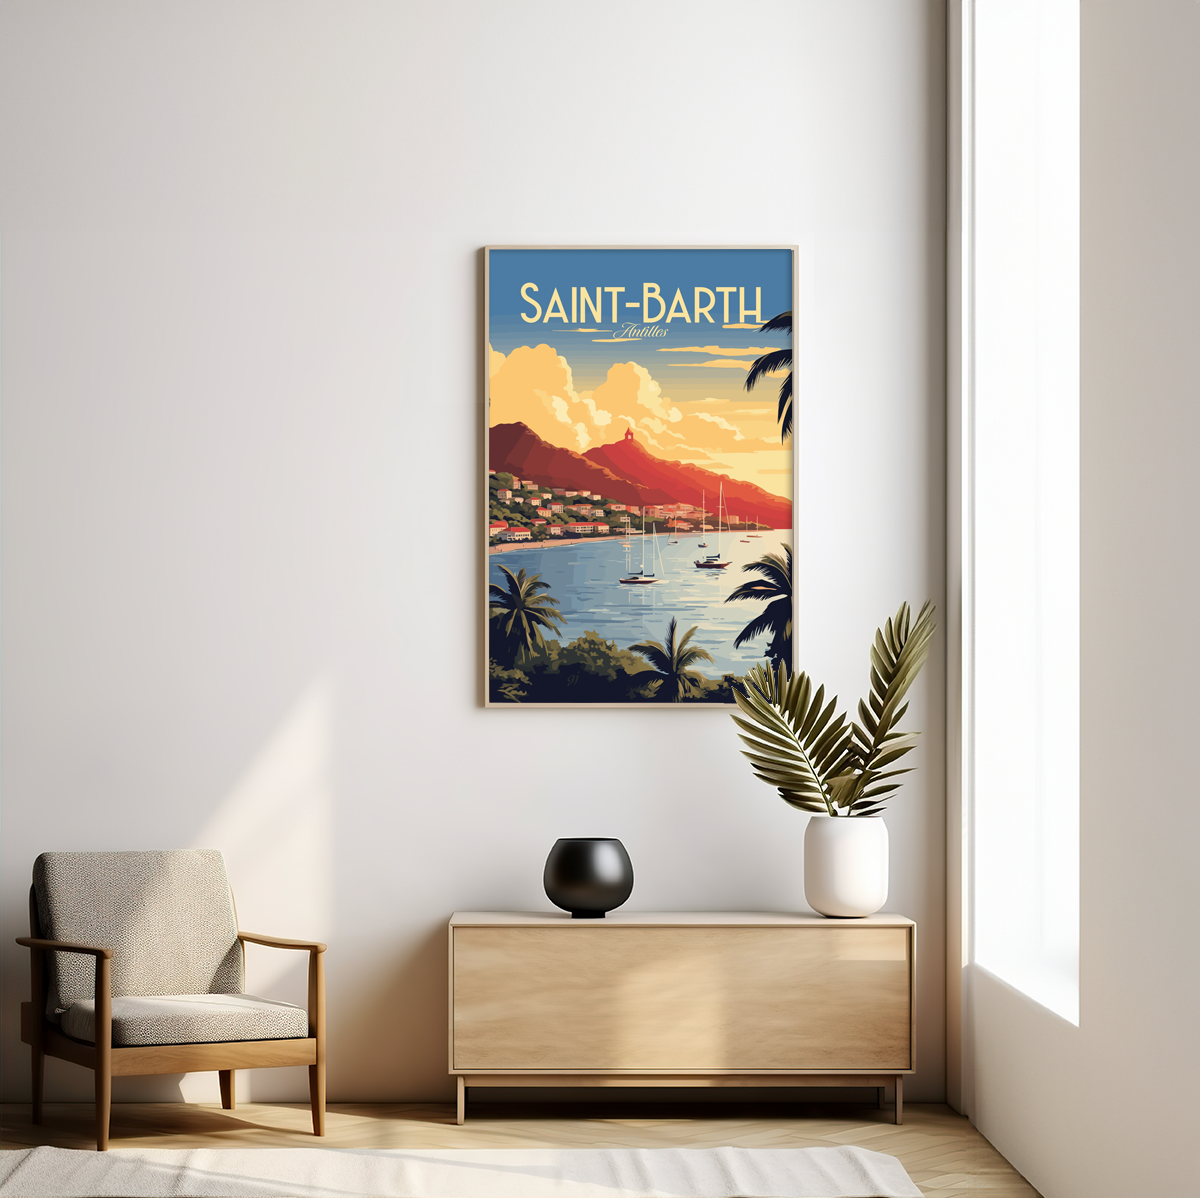 Saint Barth poster by bon voyage design